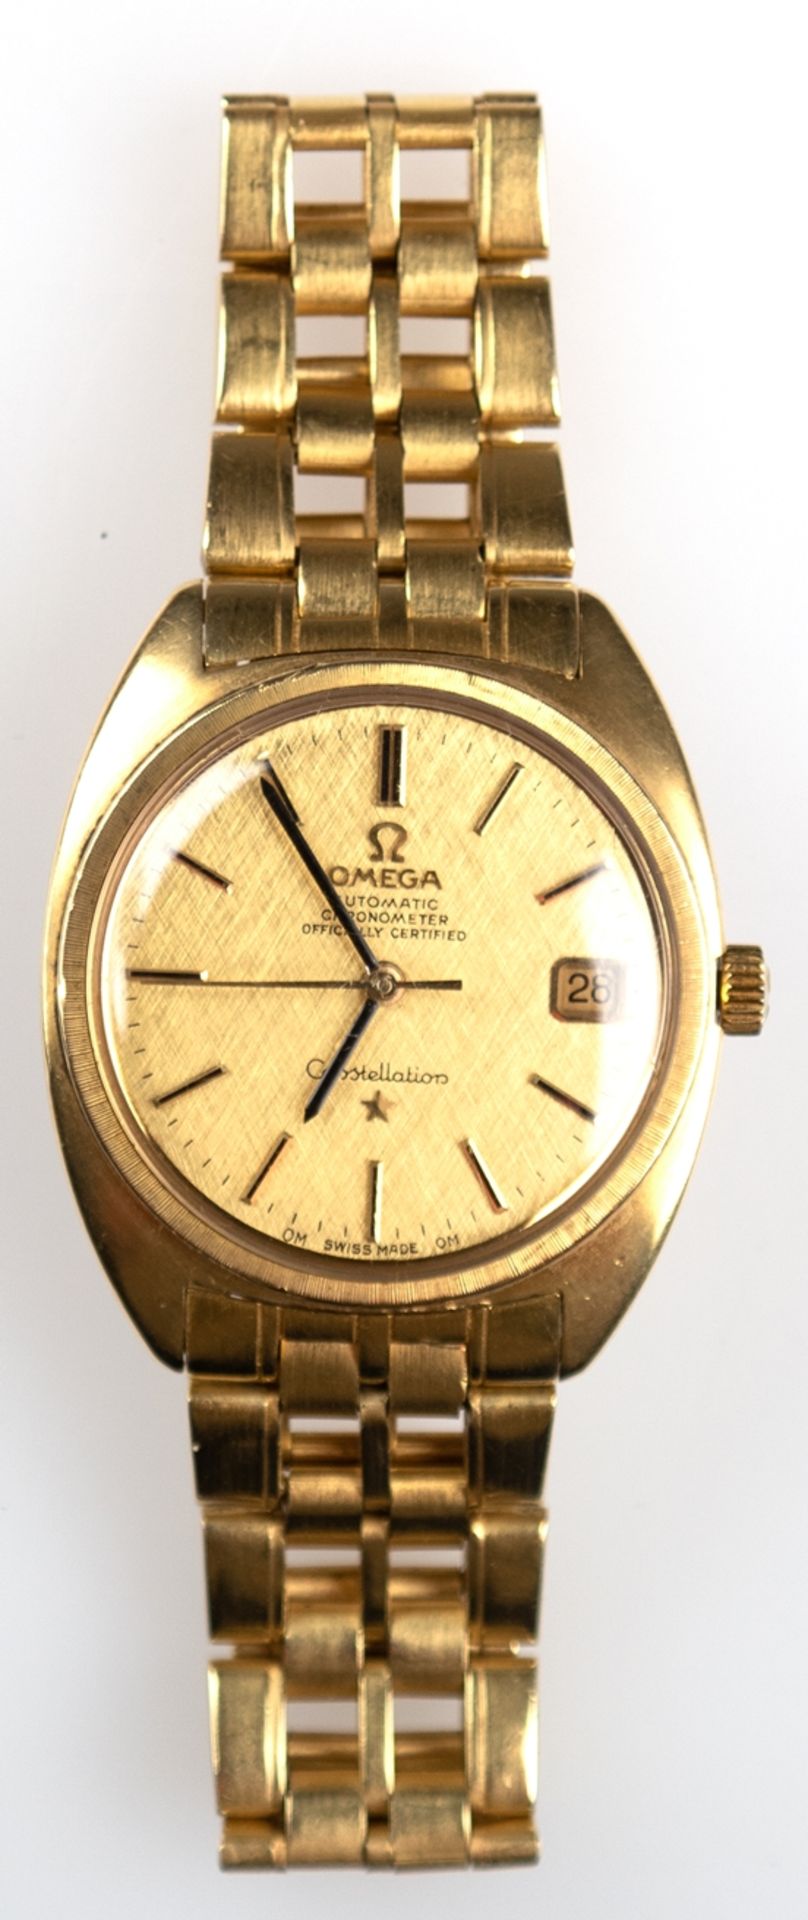 Herrenarmbanduhr "Omega", Automatic, Chronometer, Oficially Certified, Constellation, 750er GG, gol